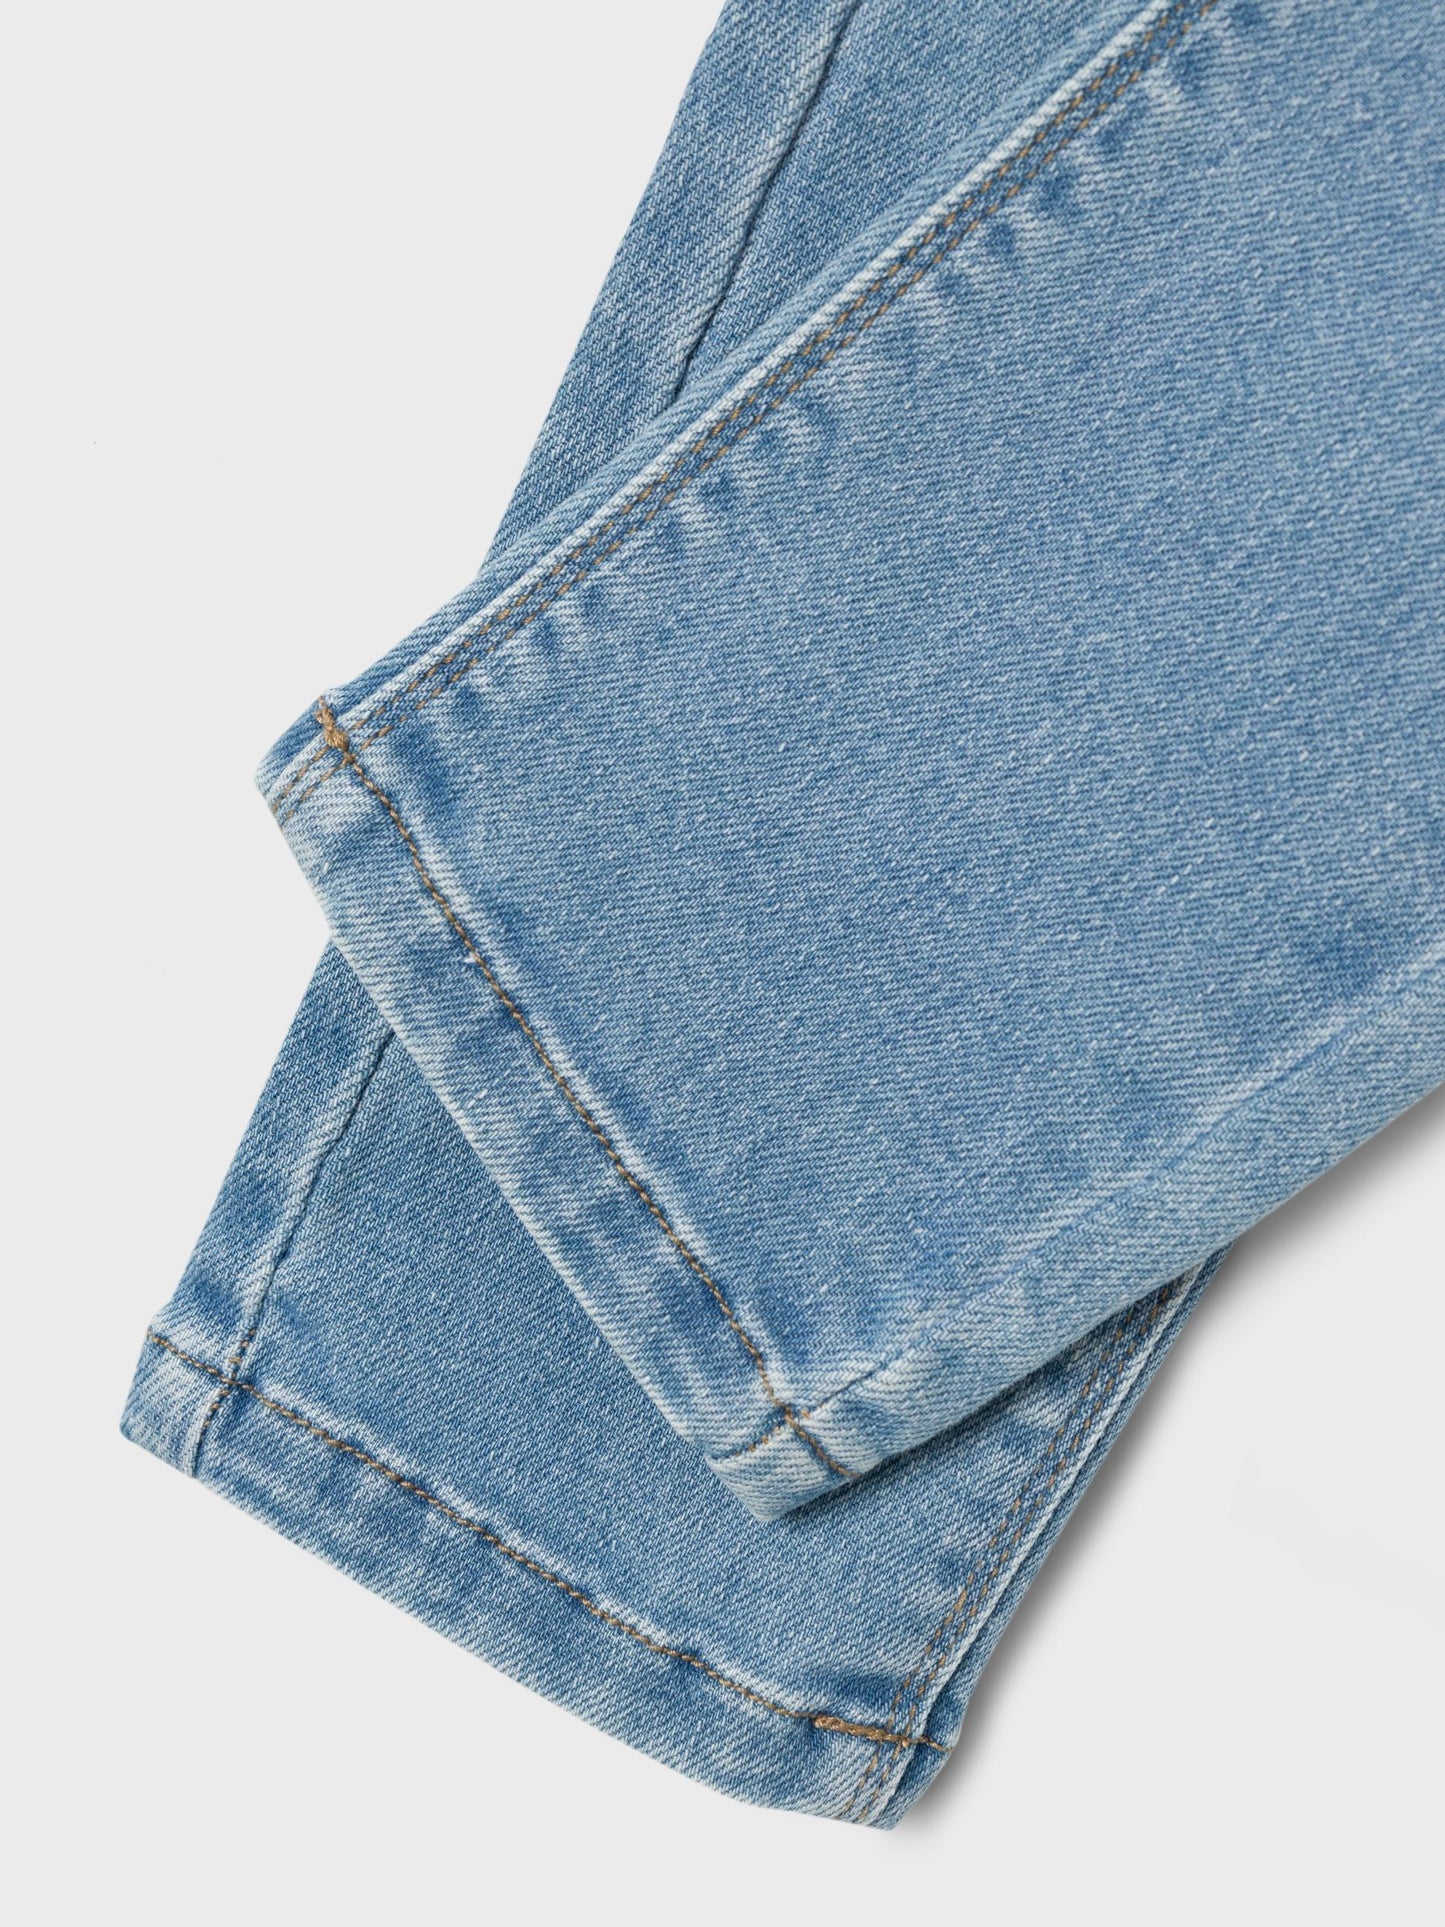 Lil atelier - Jeans - medium blue denim